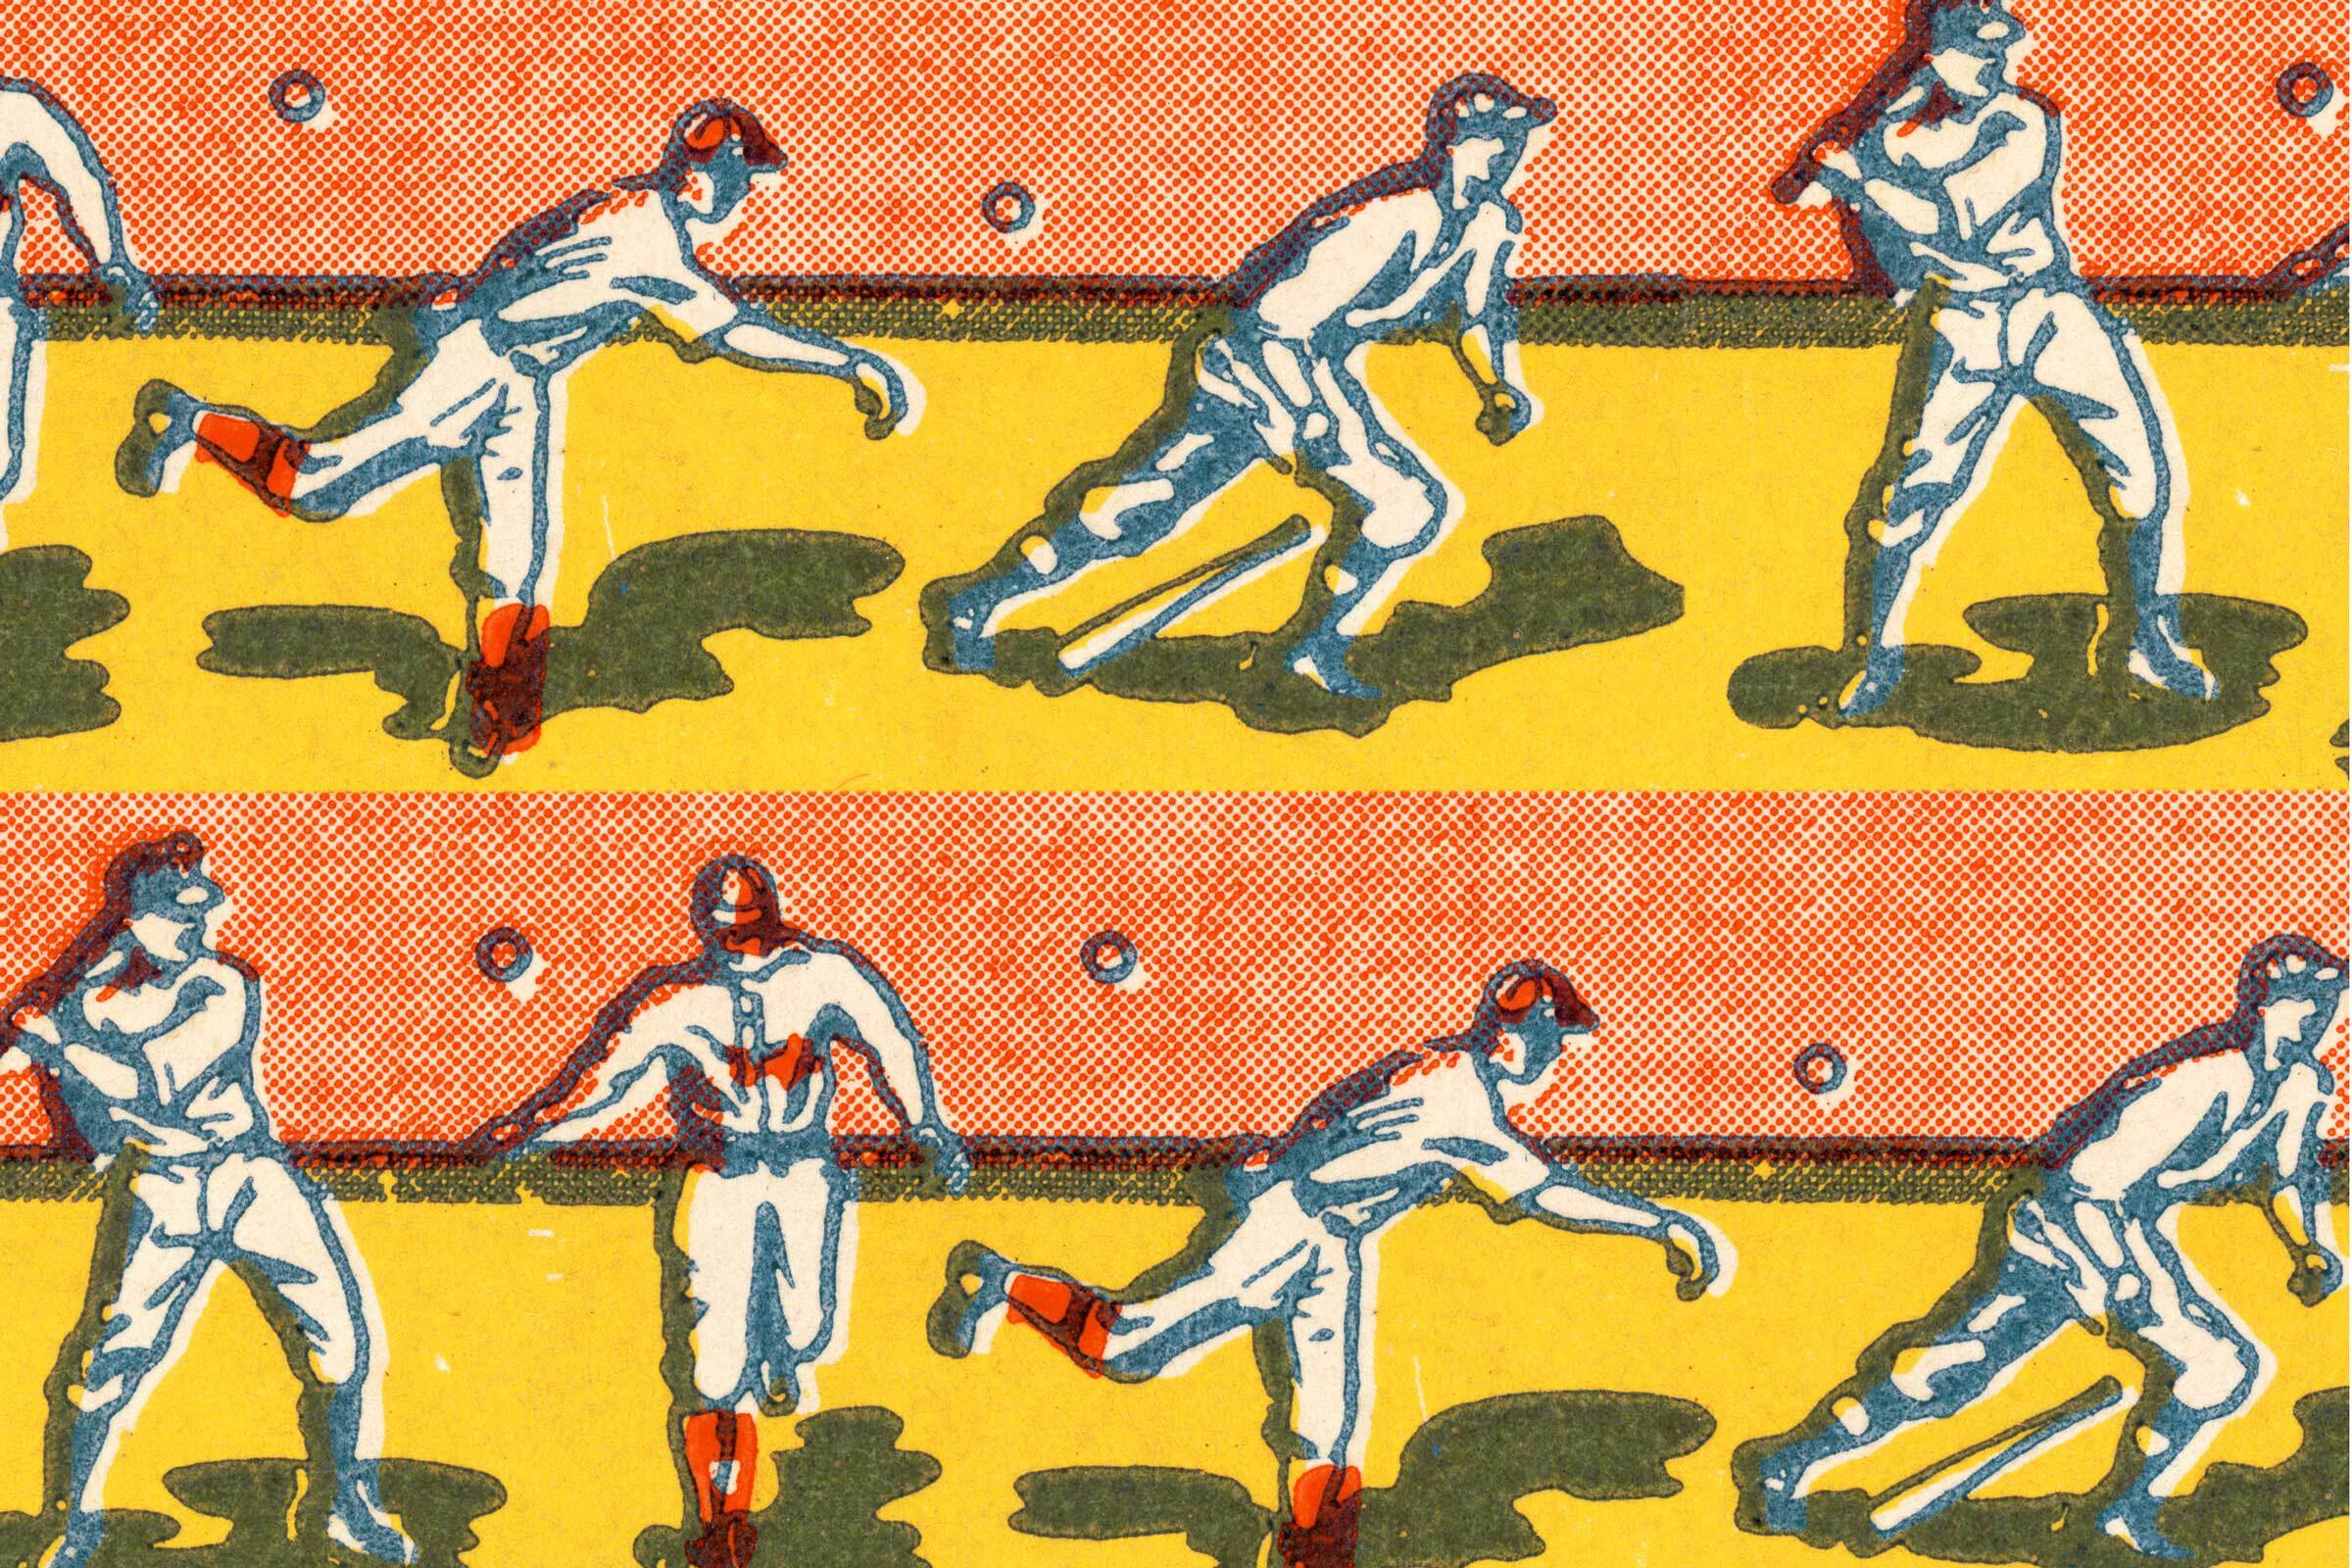 6 Ballparks to Watch Minor League Baseball